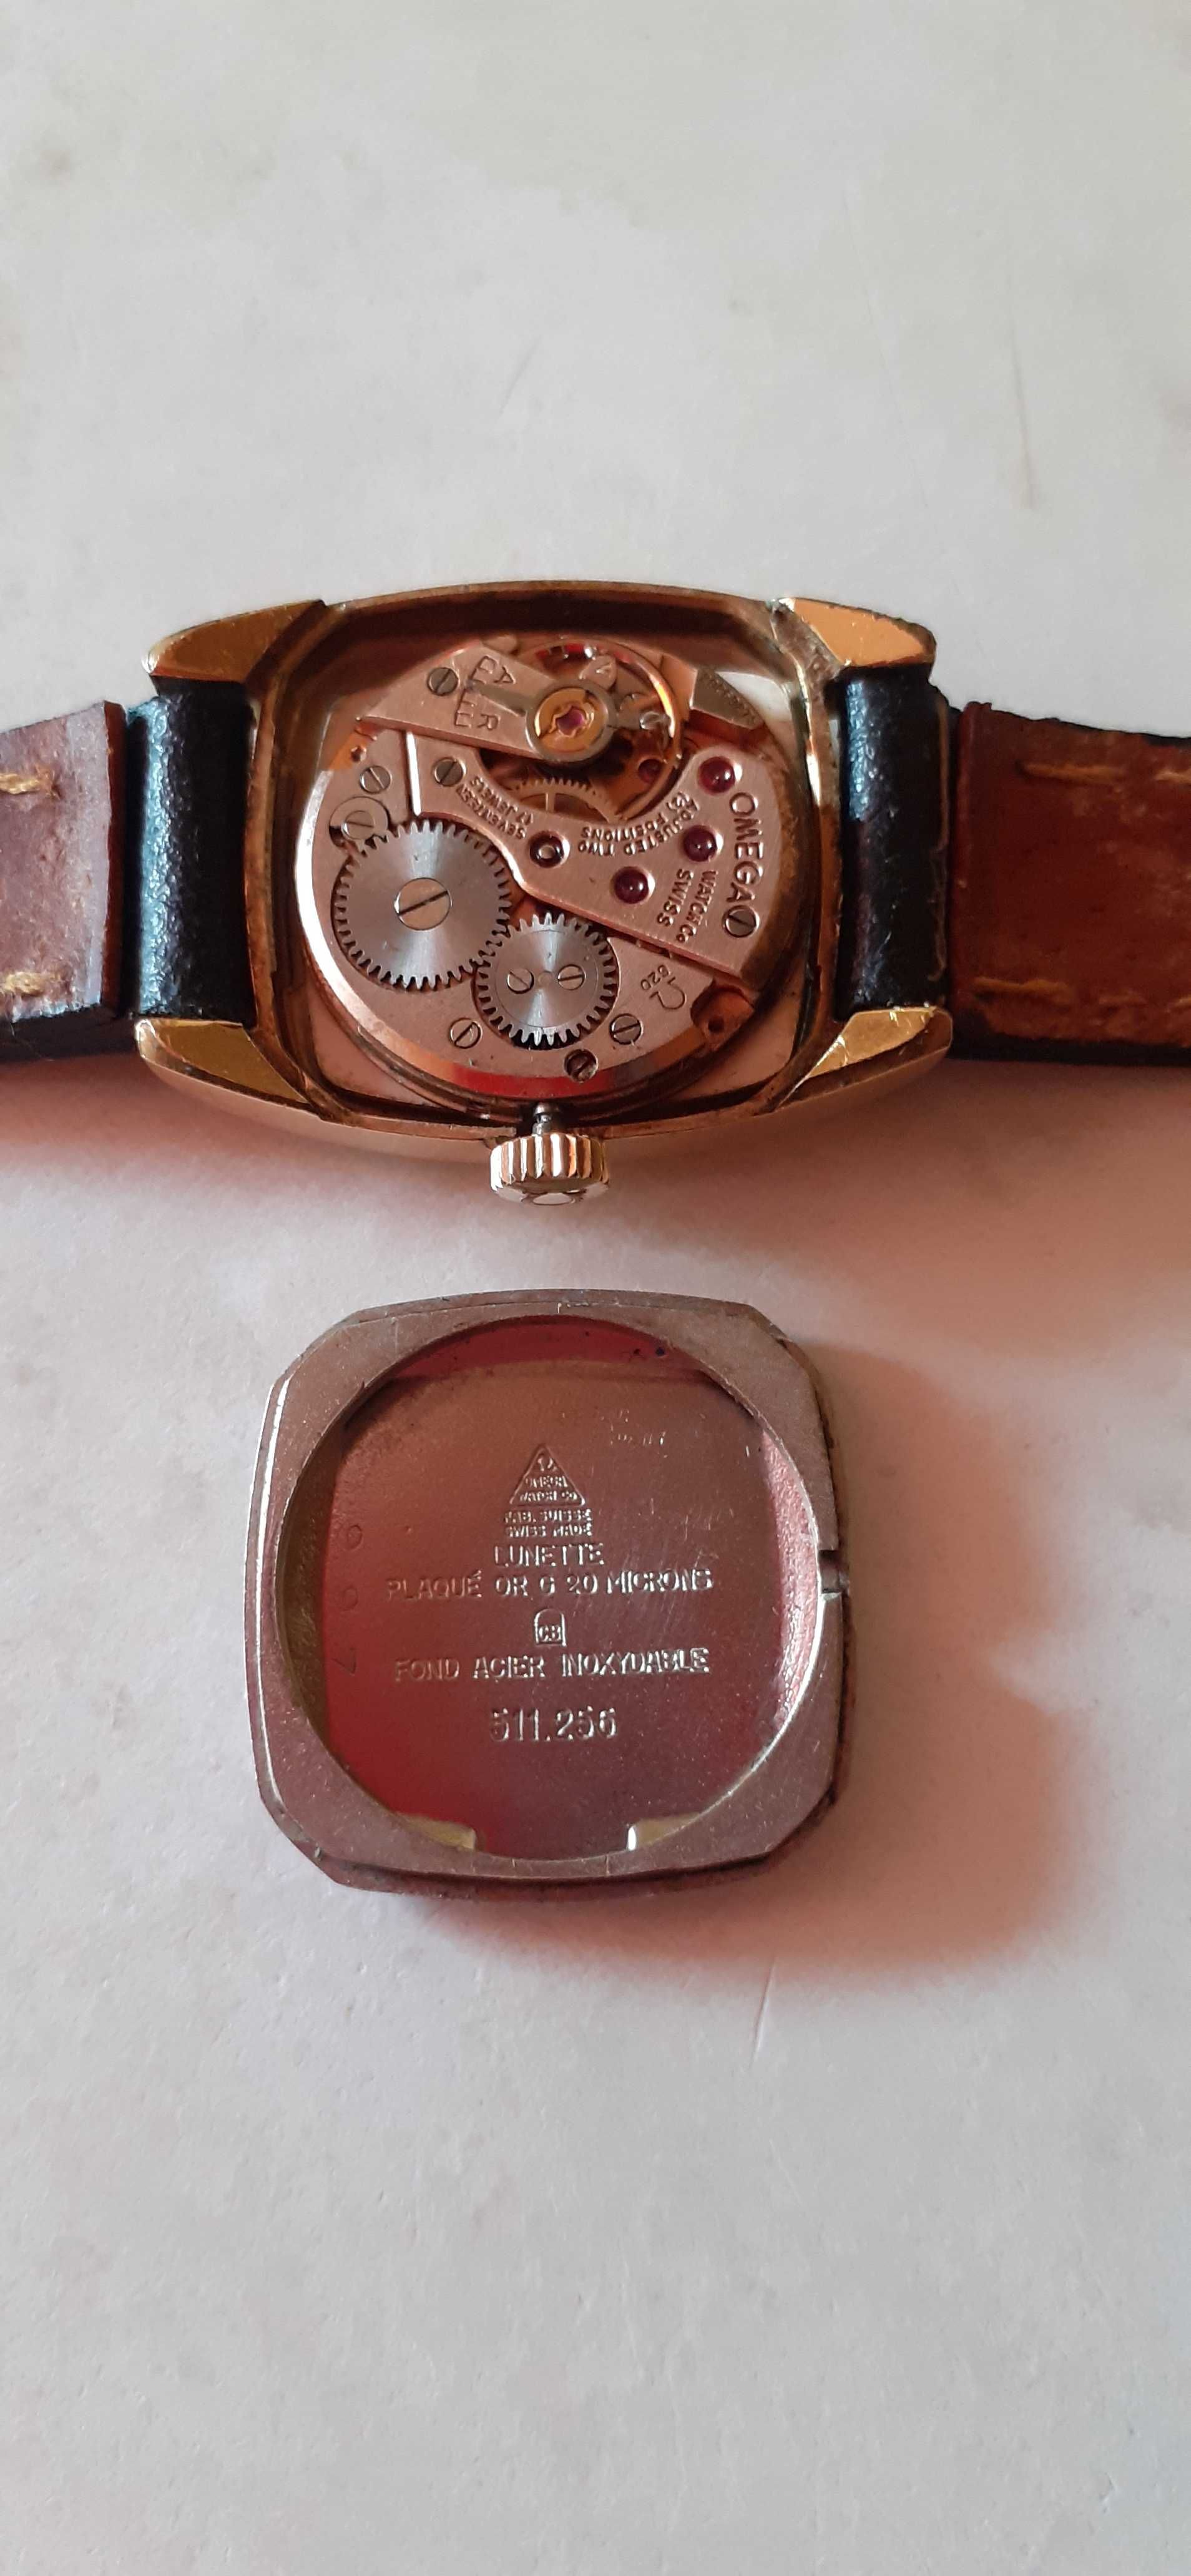 Zegarek OMEGA De VILLE złoto-pozłacana au 20.